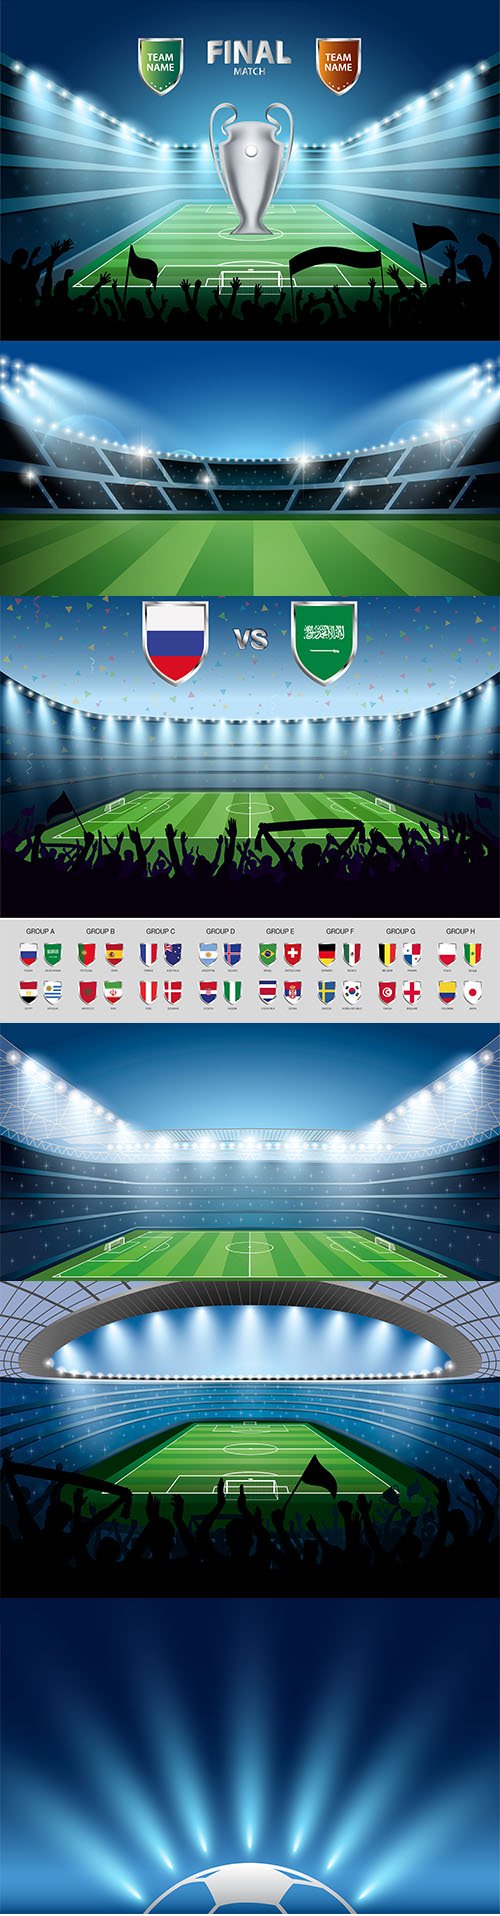 Set of Soccer Stadium Illustrations